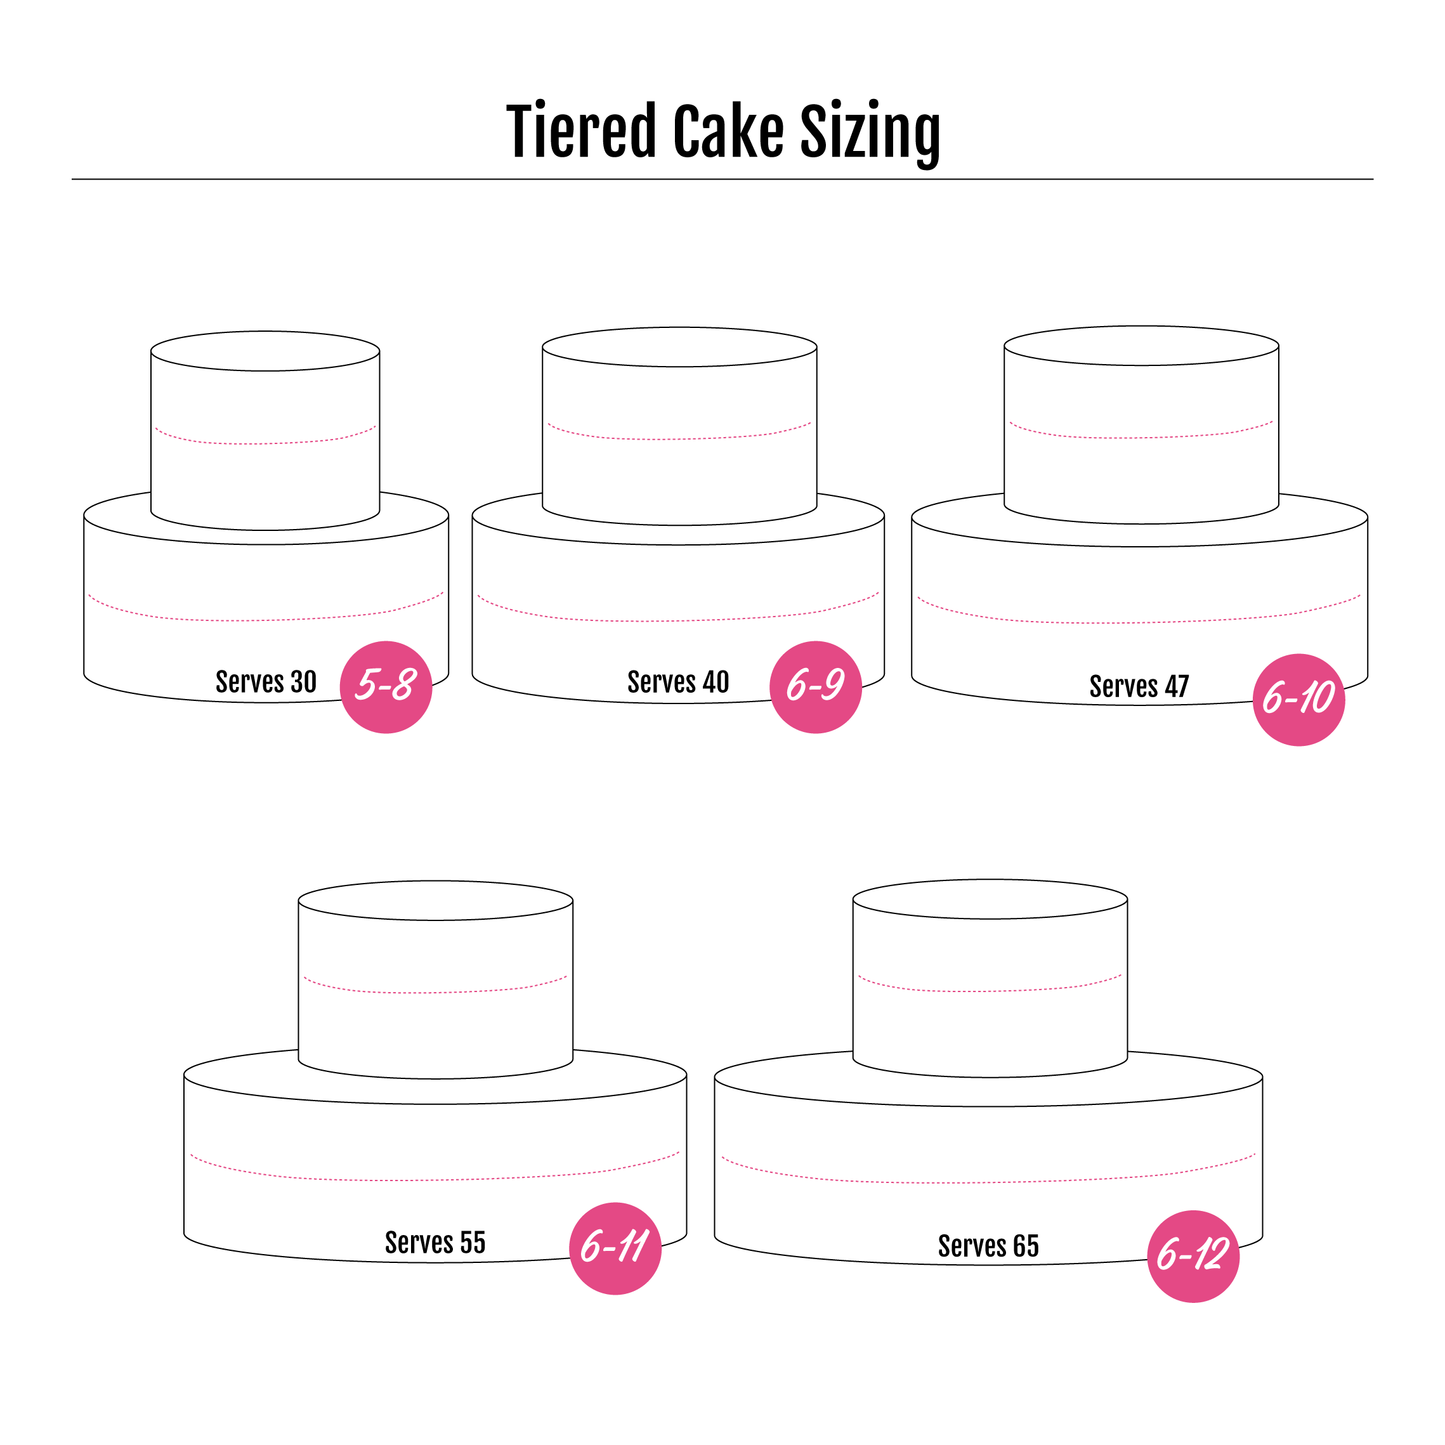 Elegant Piped Cake - 2 Tier Cake